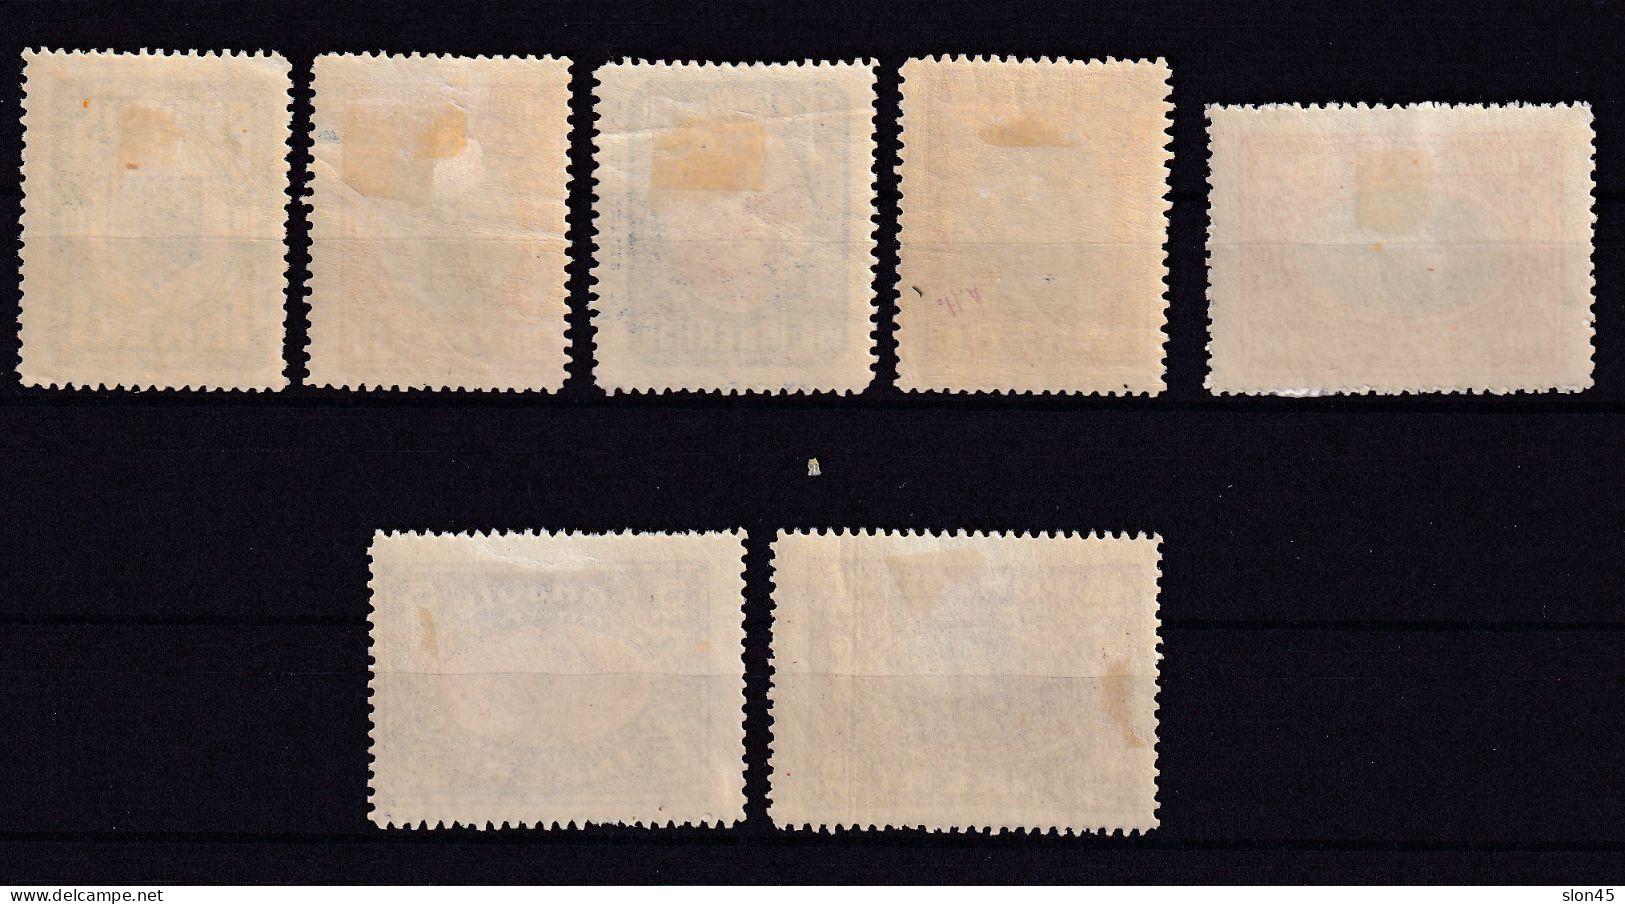 North Ingermanland 1920 2 Sets Genuine + Forgeries MH 15970 - Ongebruikt